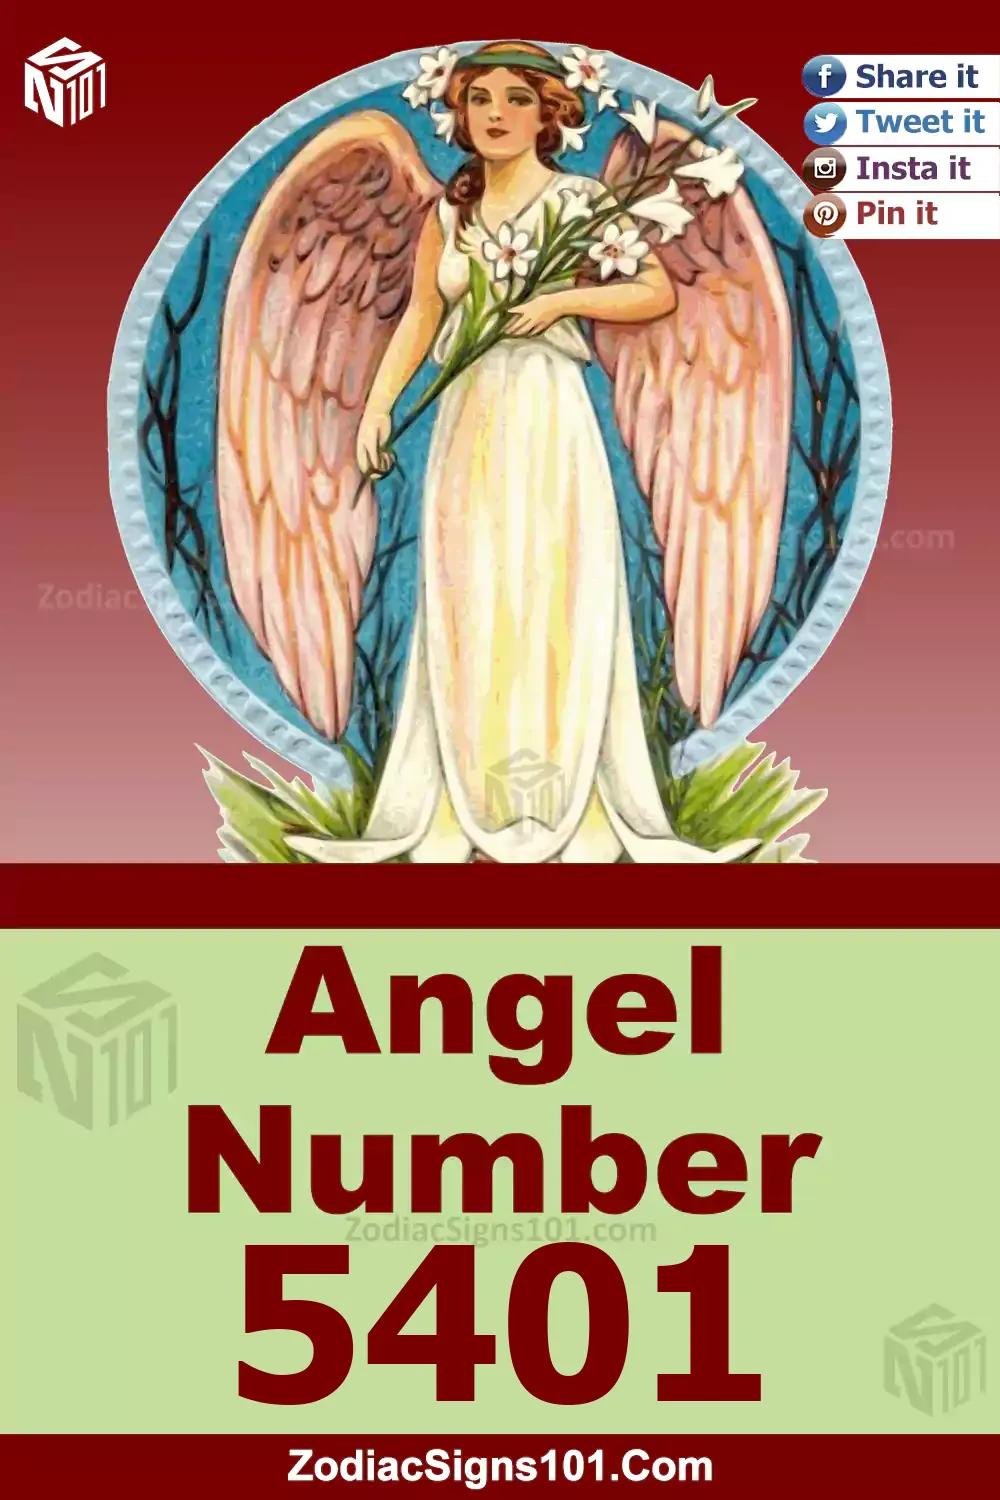 5401-Angel-Number-Meaning.jpg